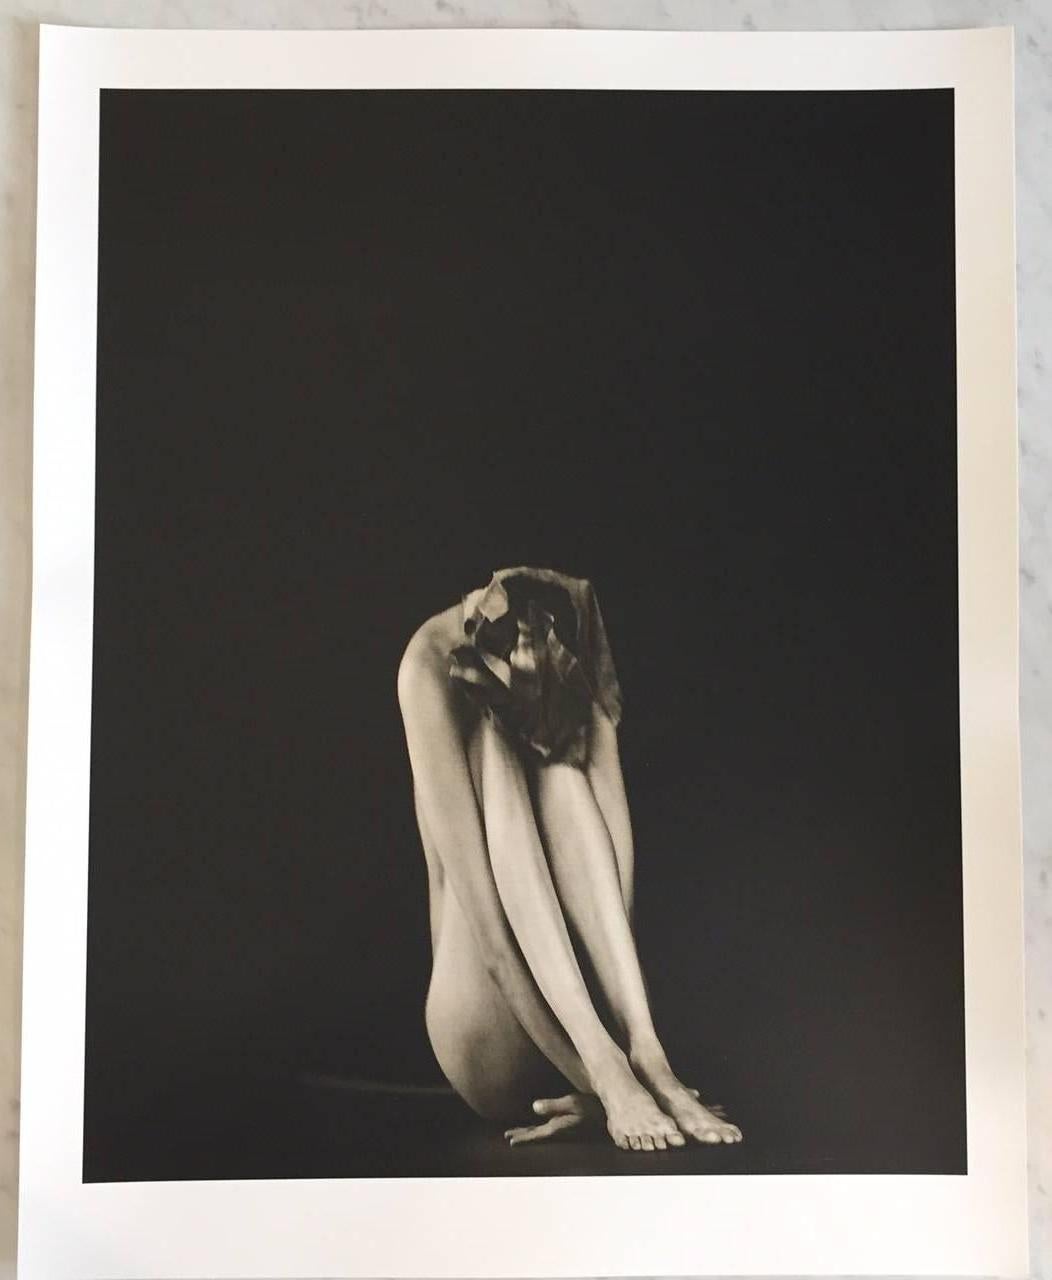 Untitled / 1013 (framed) - Photograph by John Casado